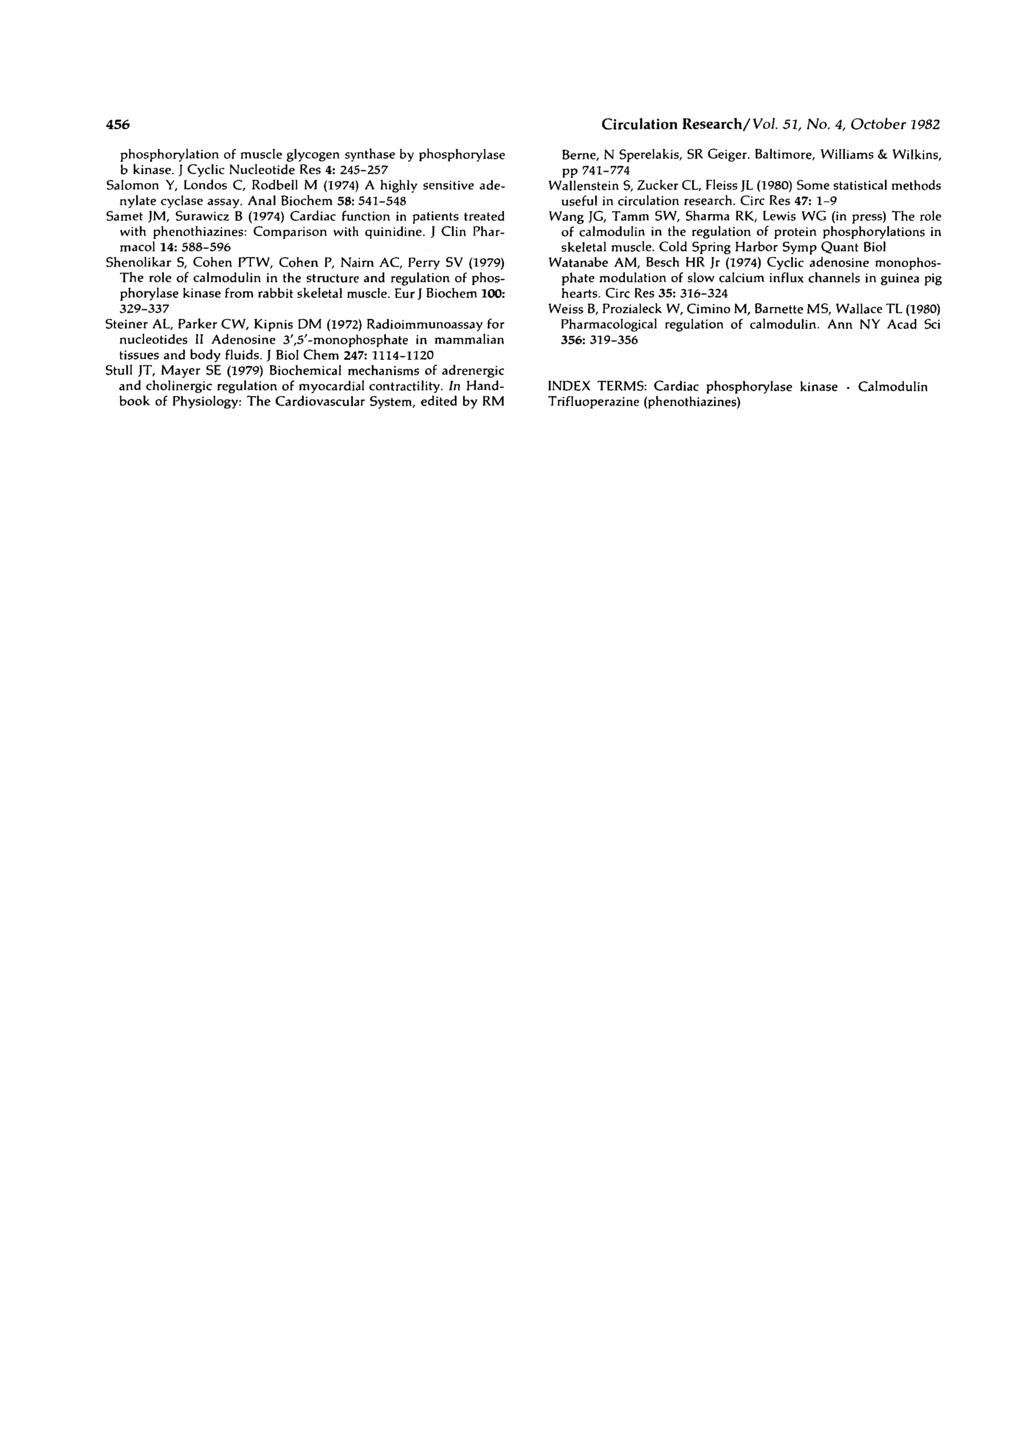 456 Circulation Research/VoJ. 51, No. 4, October 1982 phosphorylation of muscle glycogen synthase by phosphorylase b kinase.